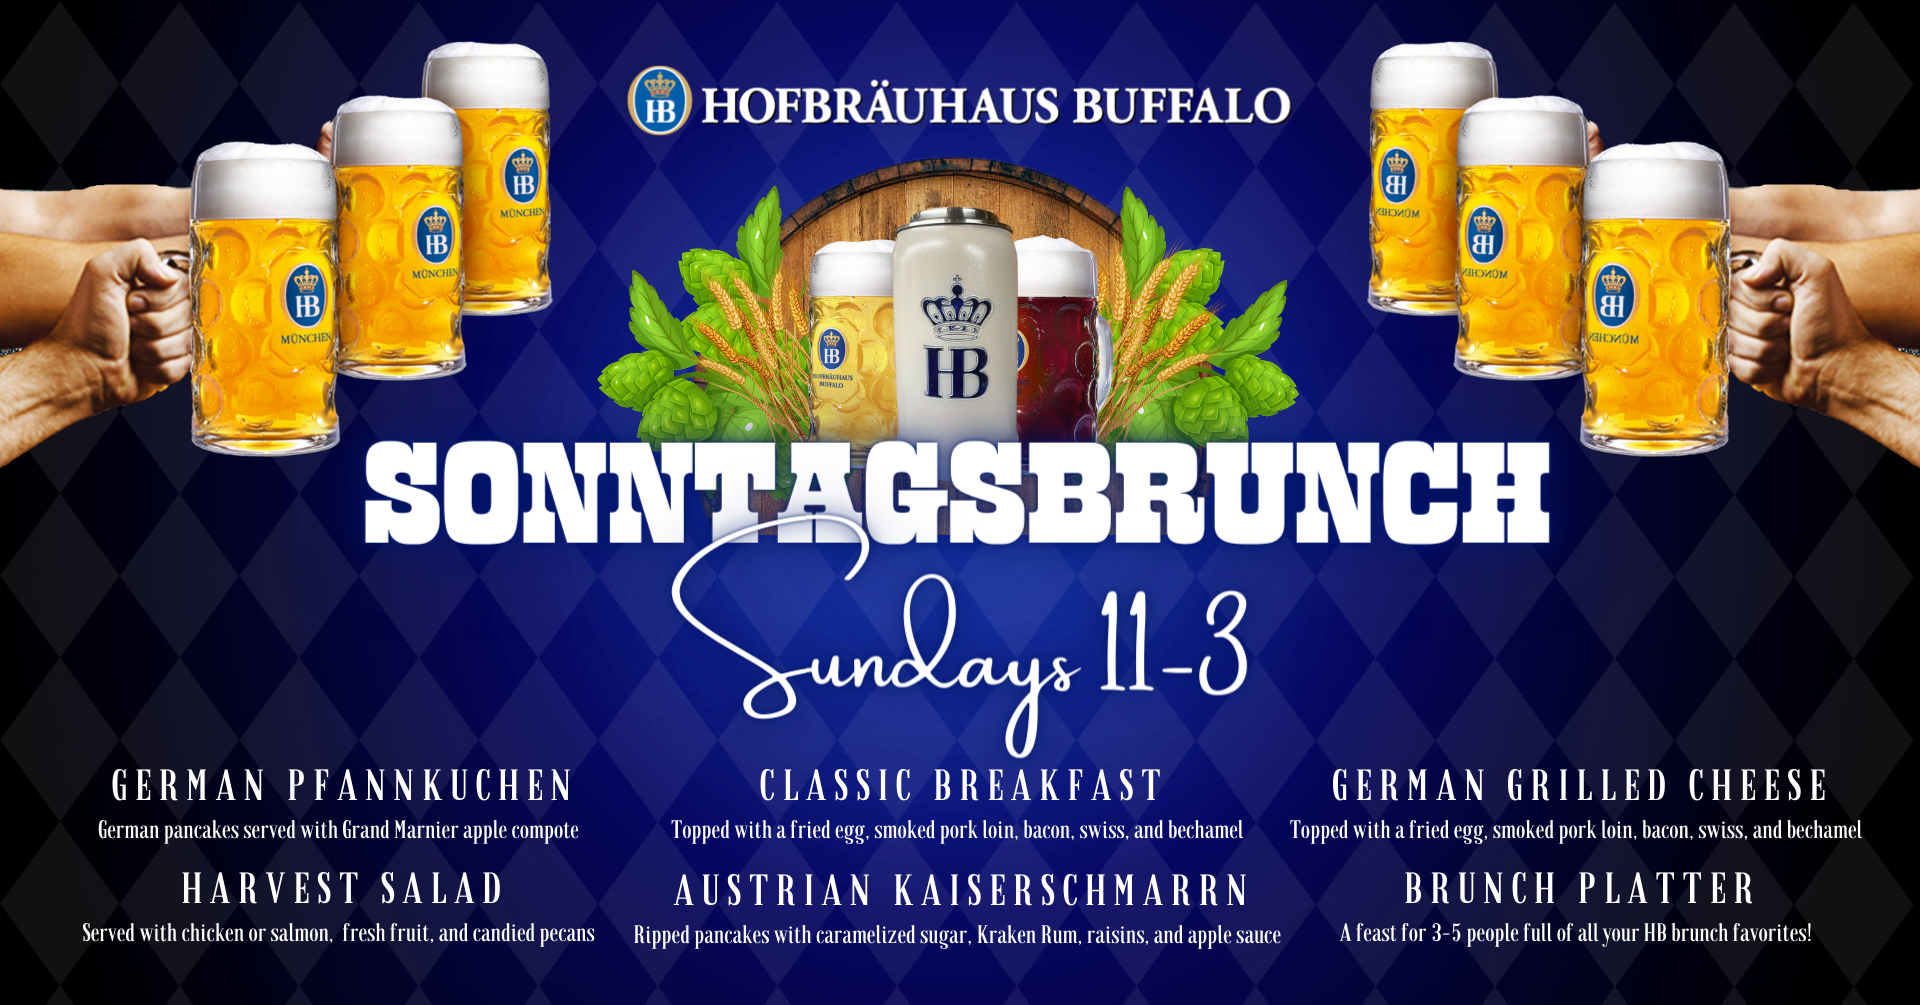 Sunday Brunch at Hofbrauhaus Buffalo